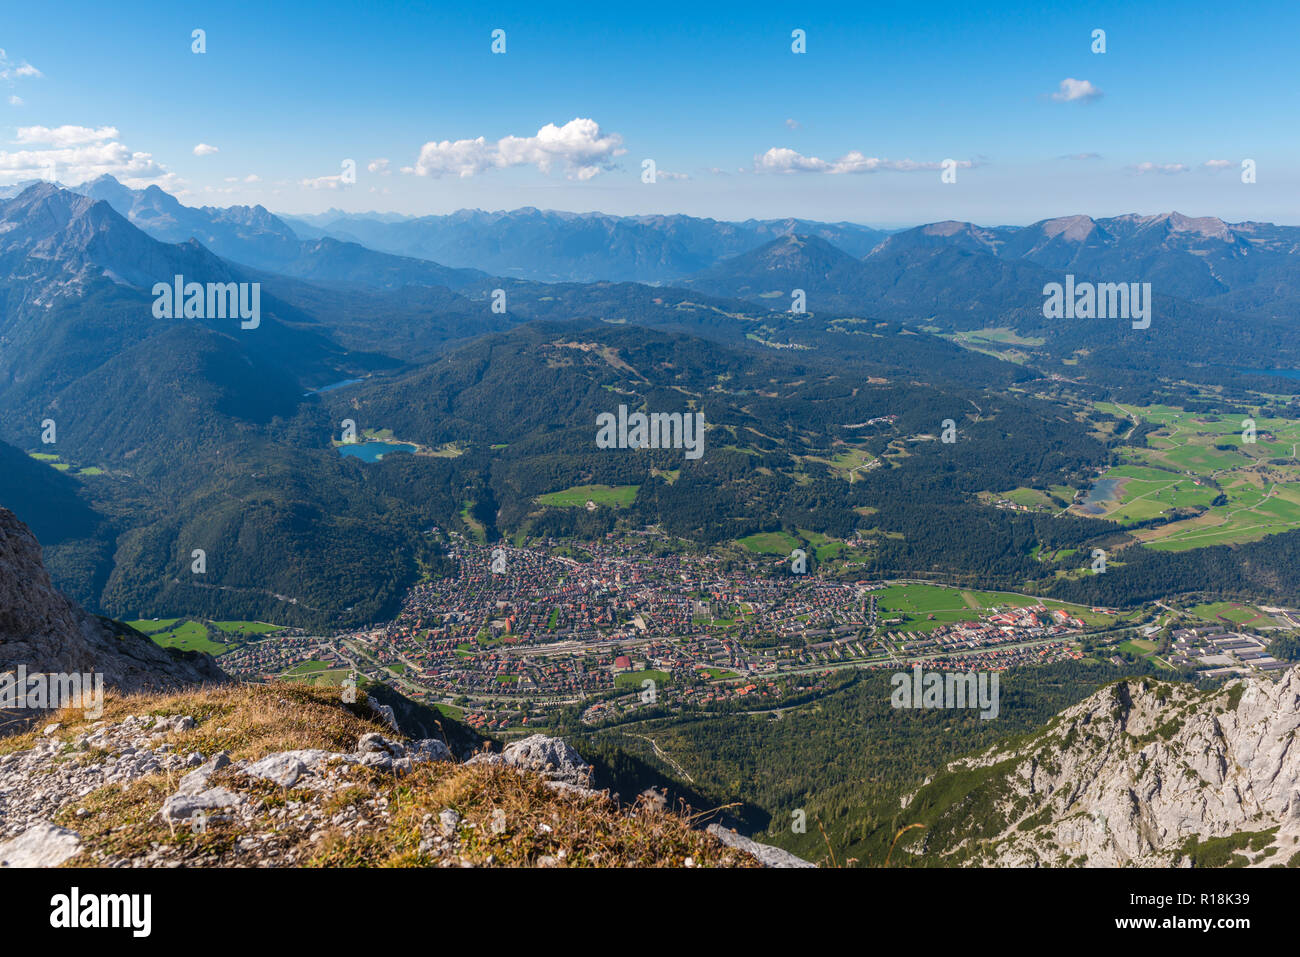 Panoramaweg passamani, Passamani Sentiero escursionistico, vista su Mittenwald, Karwendelbahn, Karwendelgebirge o montagne Karwendel, Alpi, Baviera, Germania Foto Stock